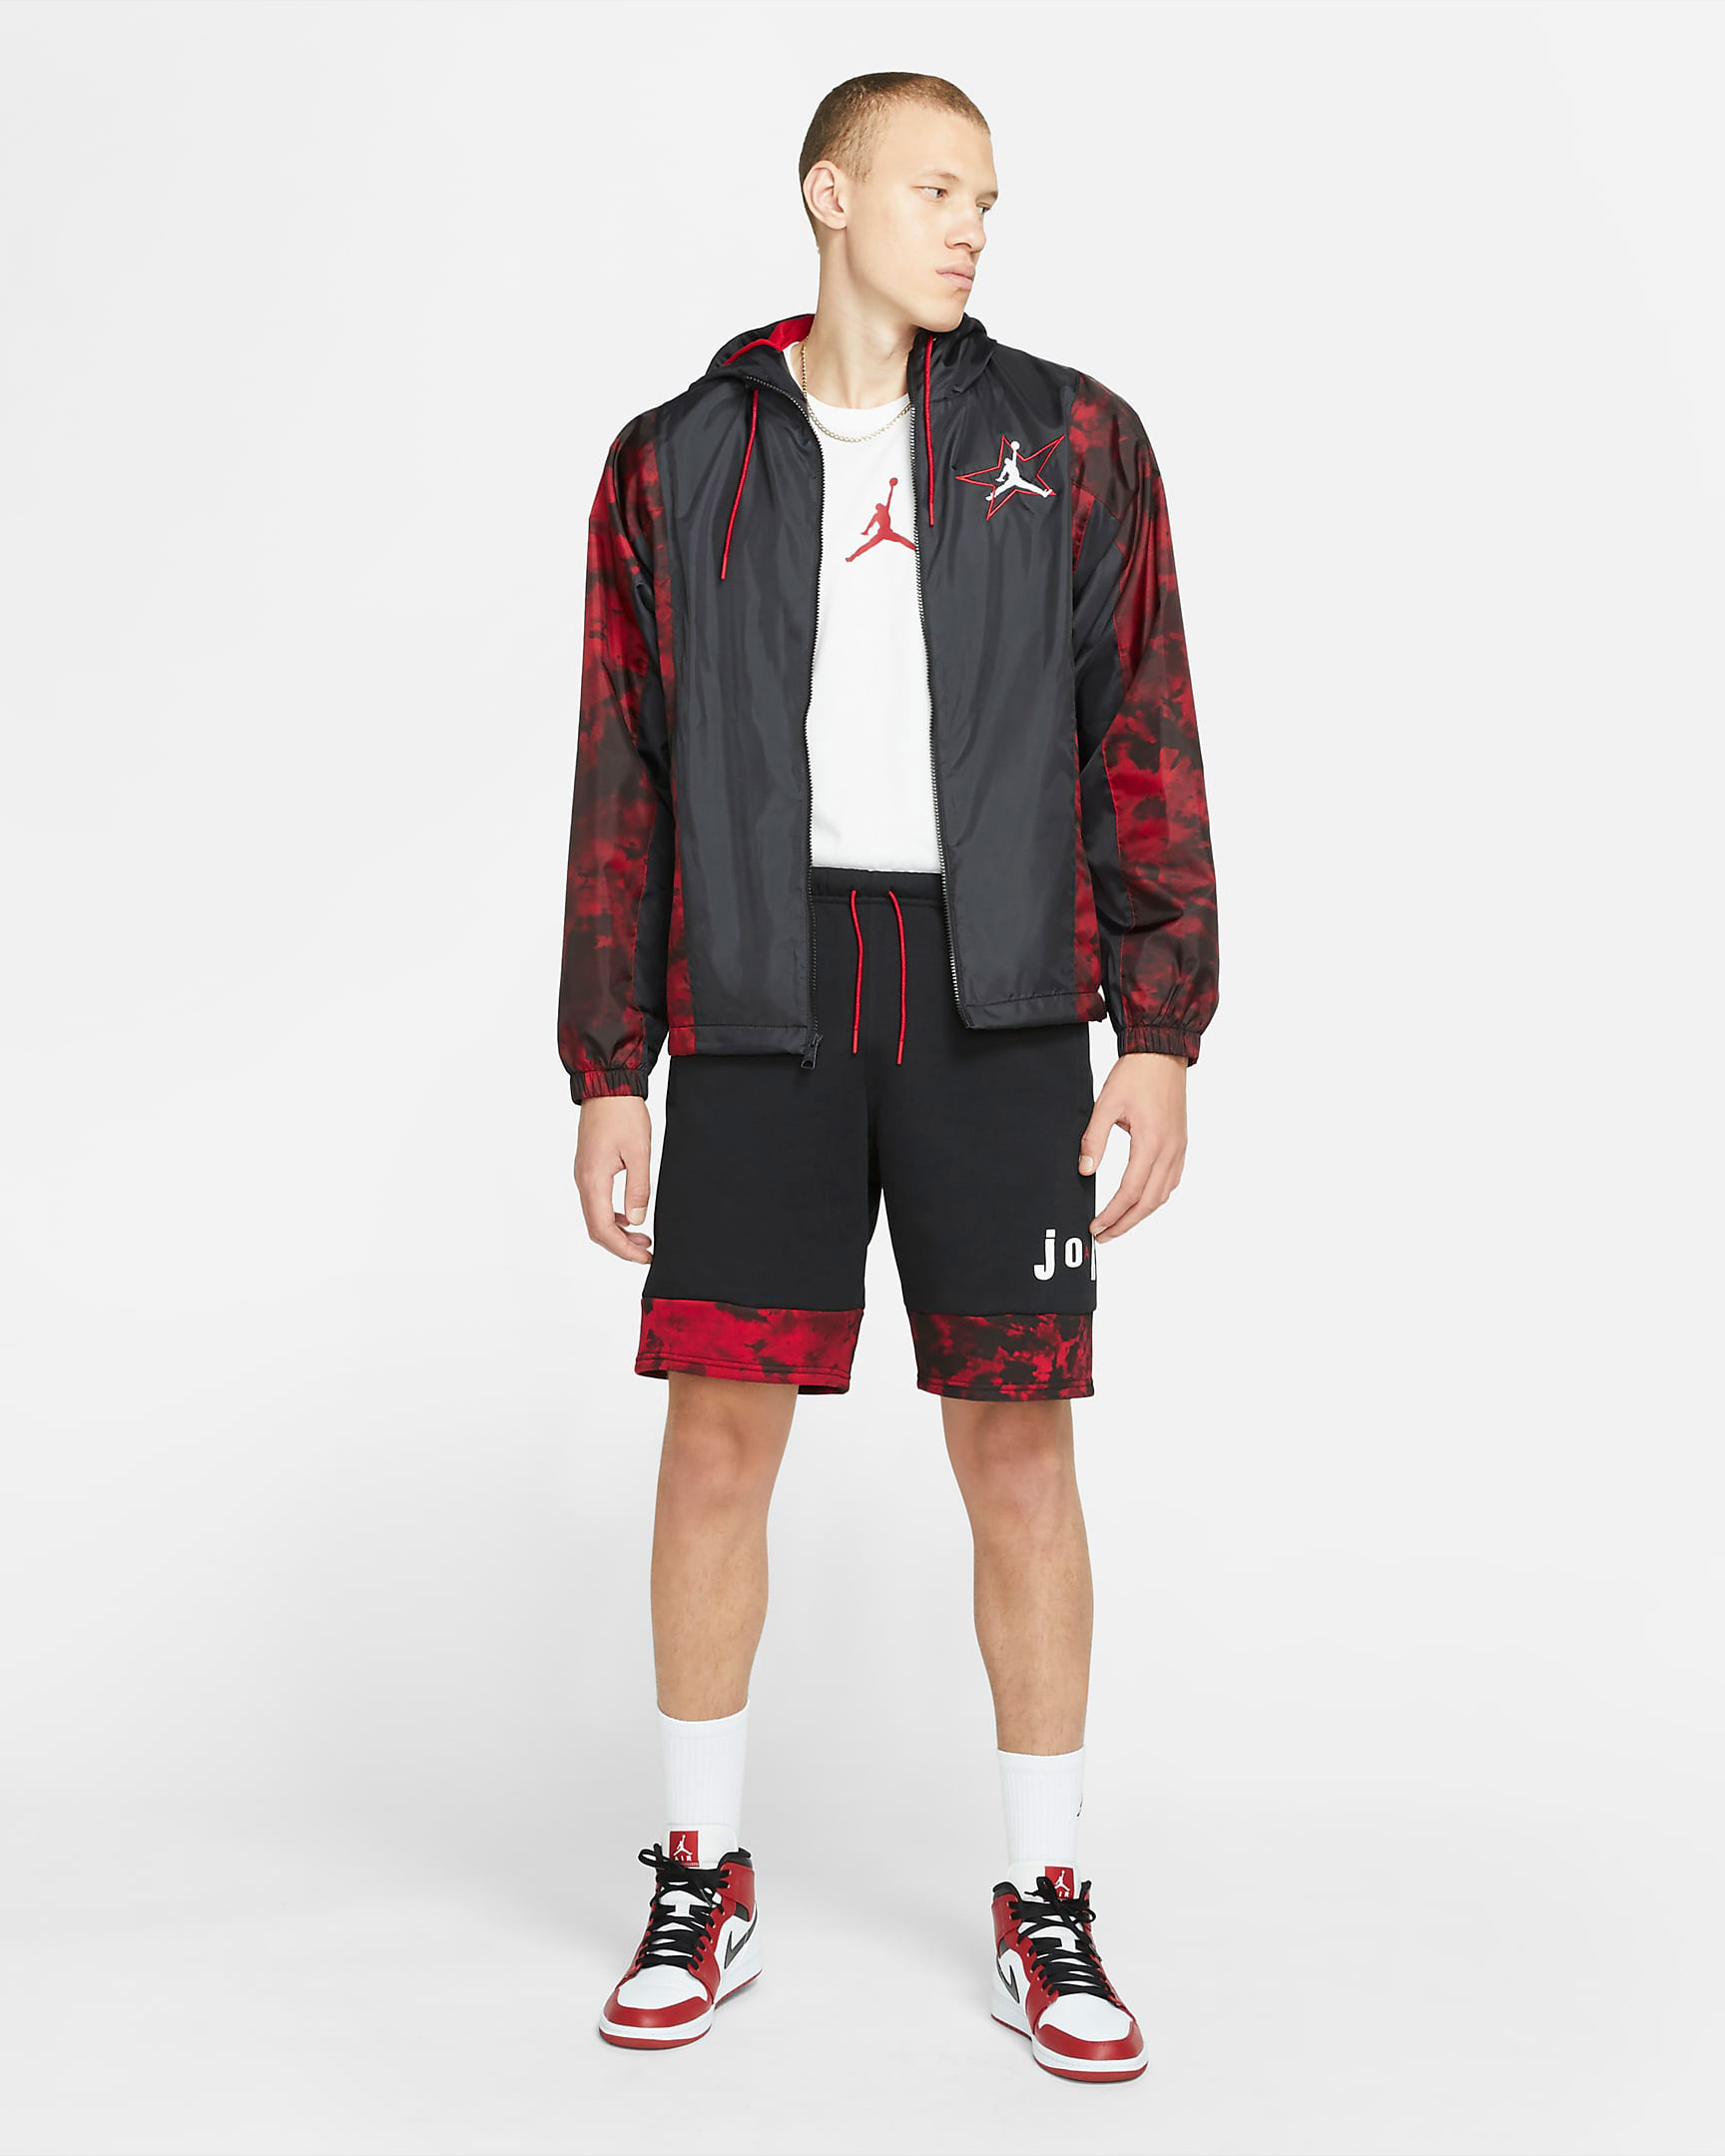 carmine-air-jordan-6-2021-shorts-jacket-outfit